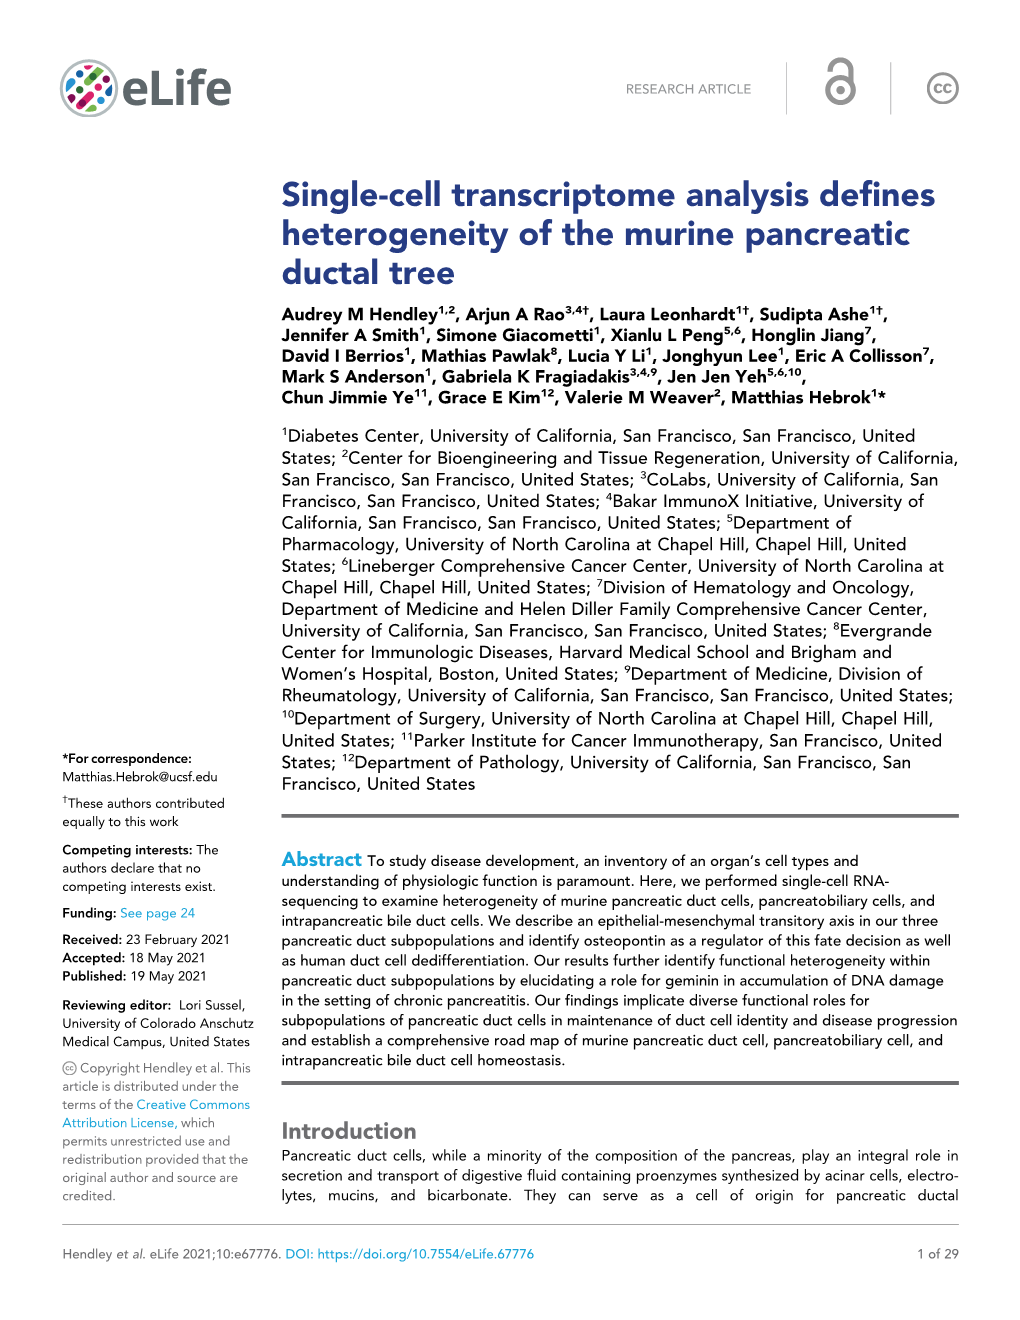 Single-Cell Transcriptome Analysis Defines Heterogeneity of the Murine